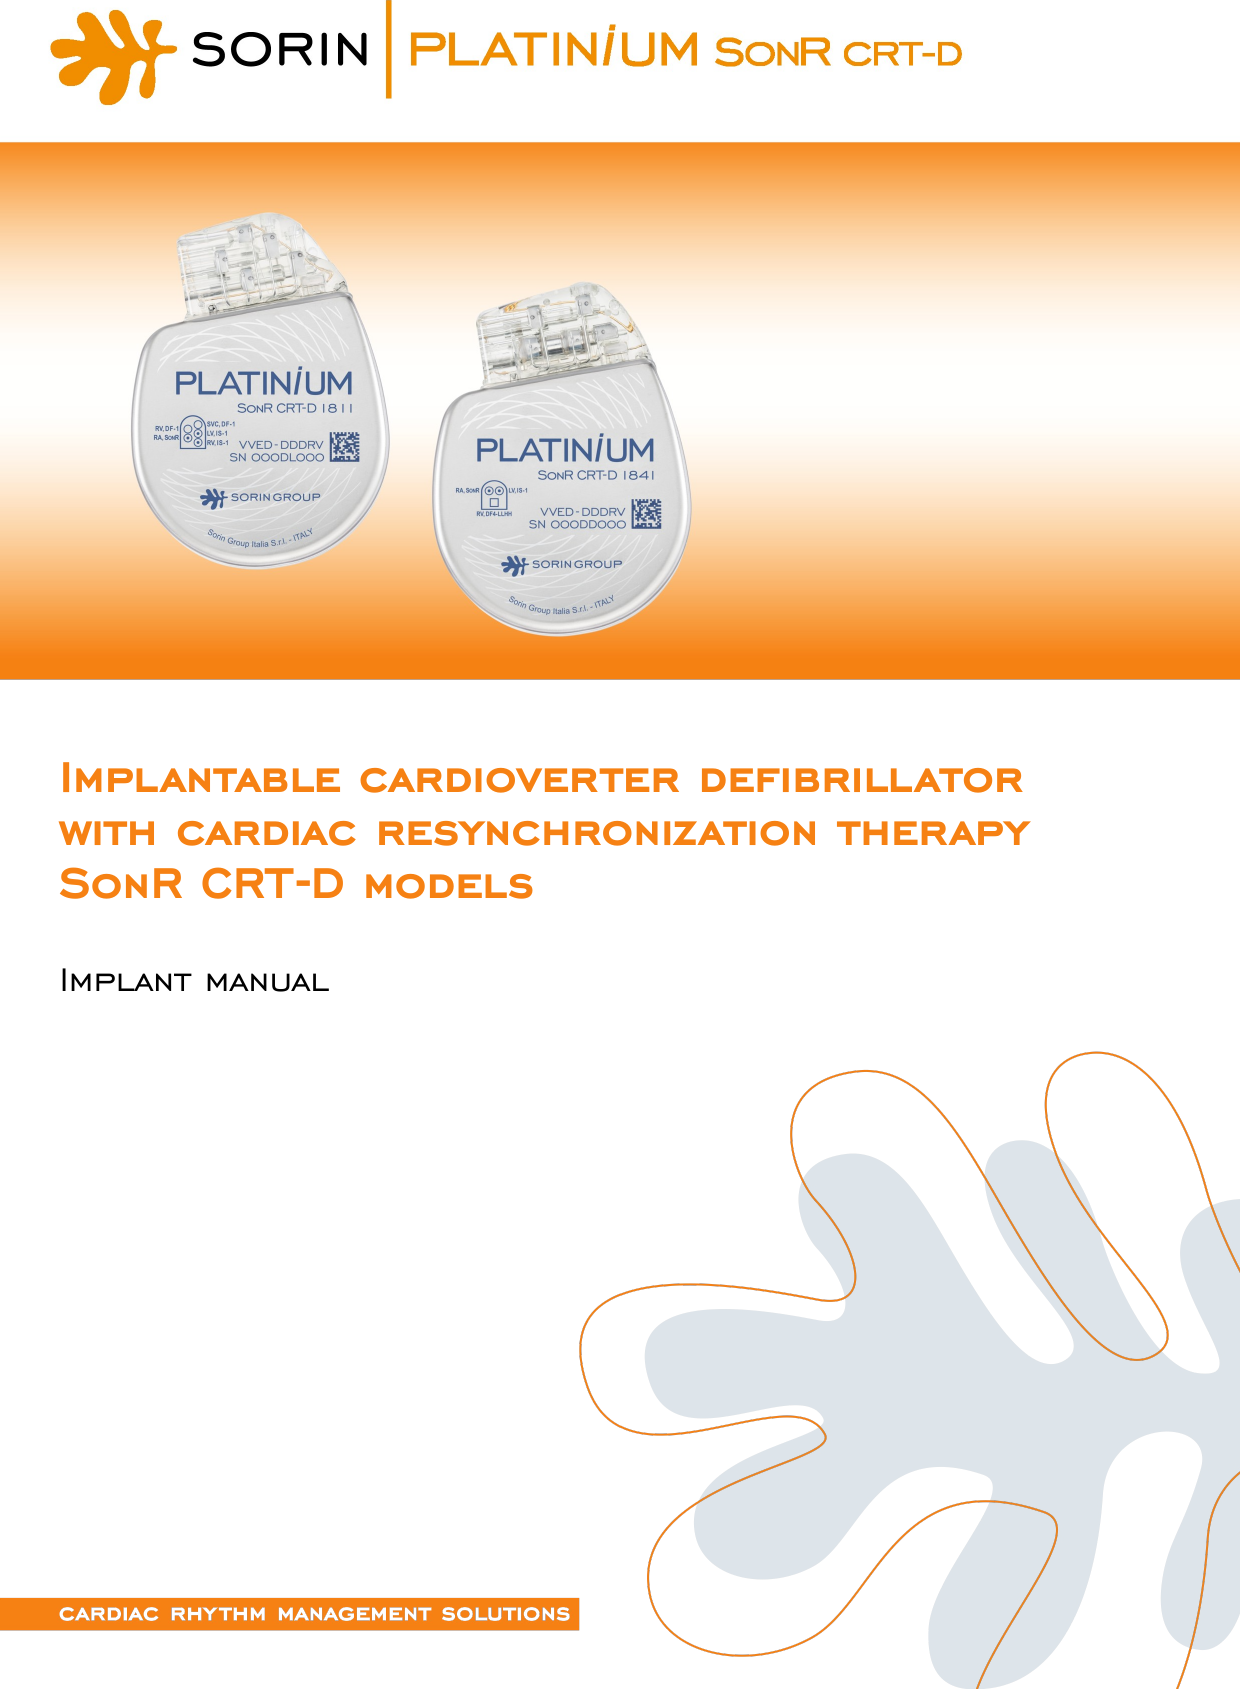 Implantable cardioverter defibrillator with cardiac resynchronization therapySonR CRT -D modelsImplant manual